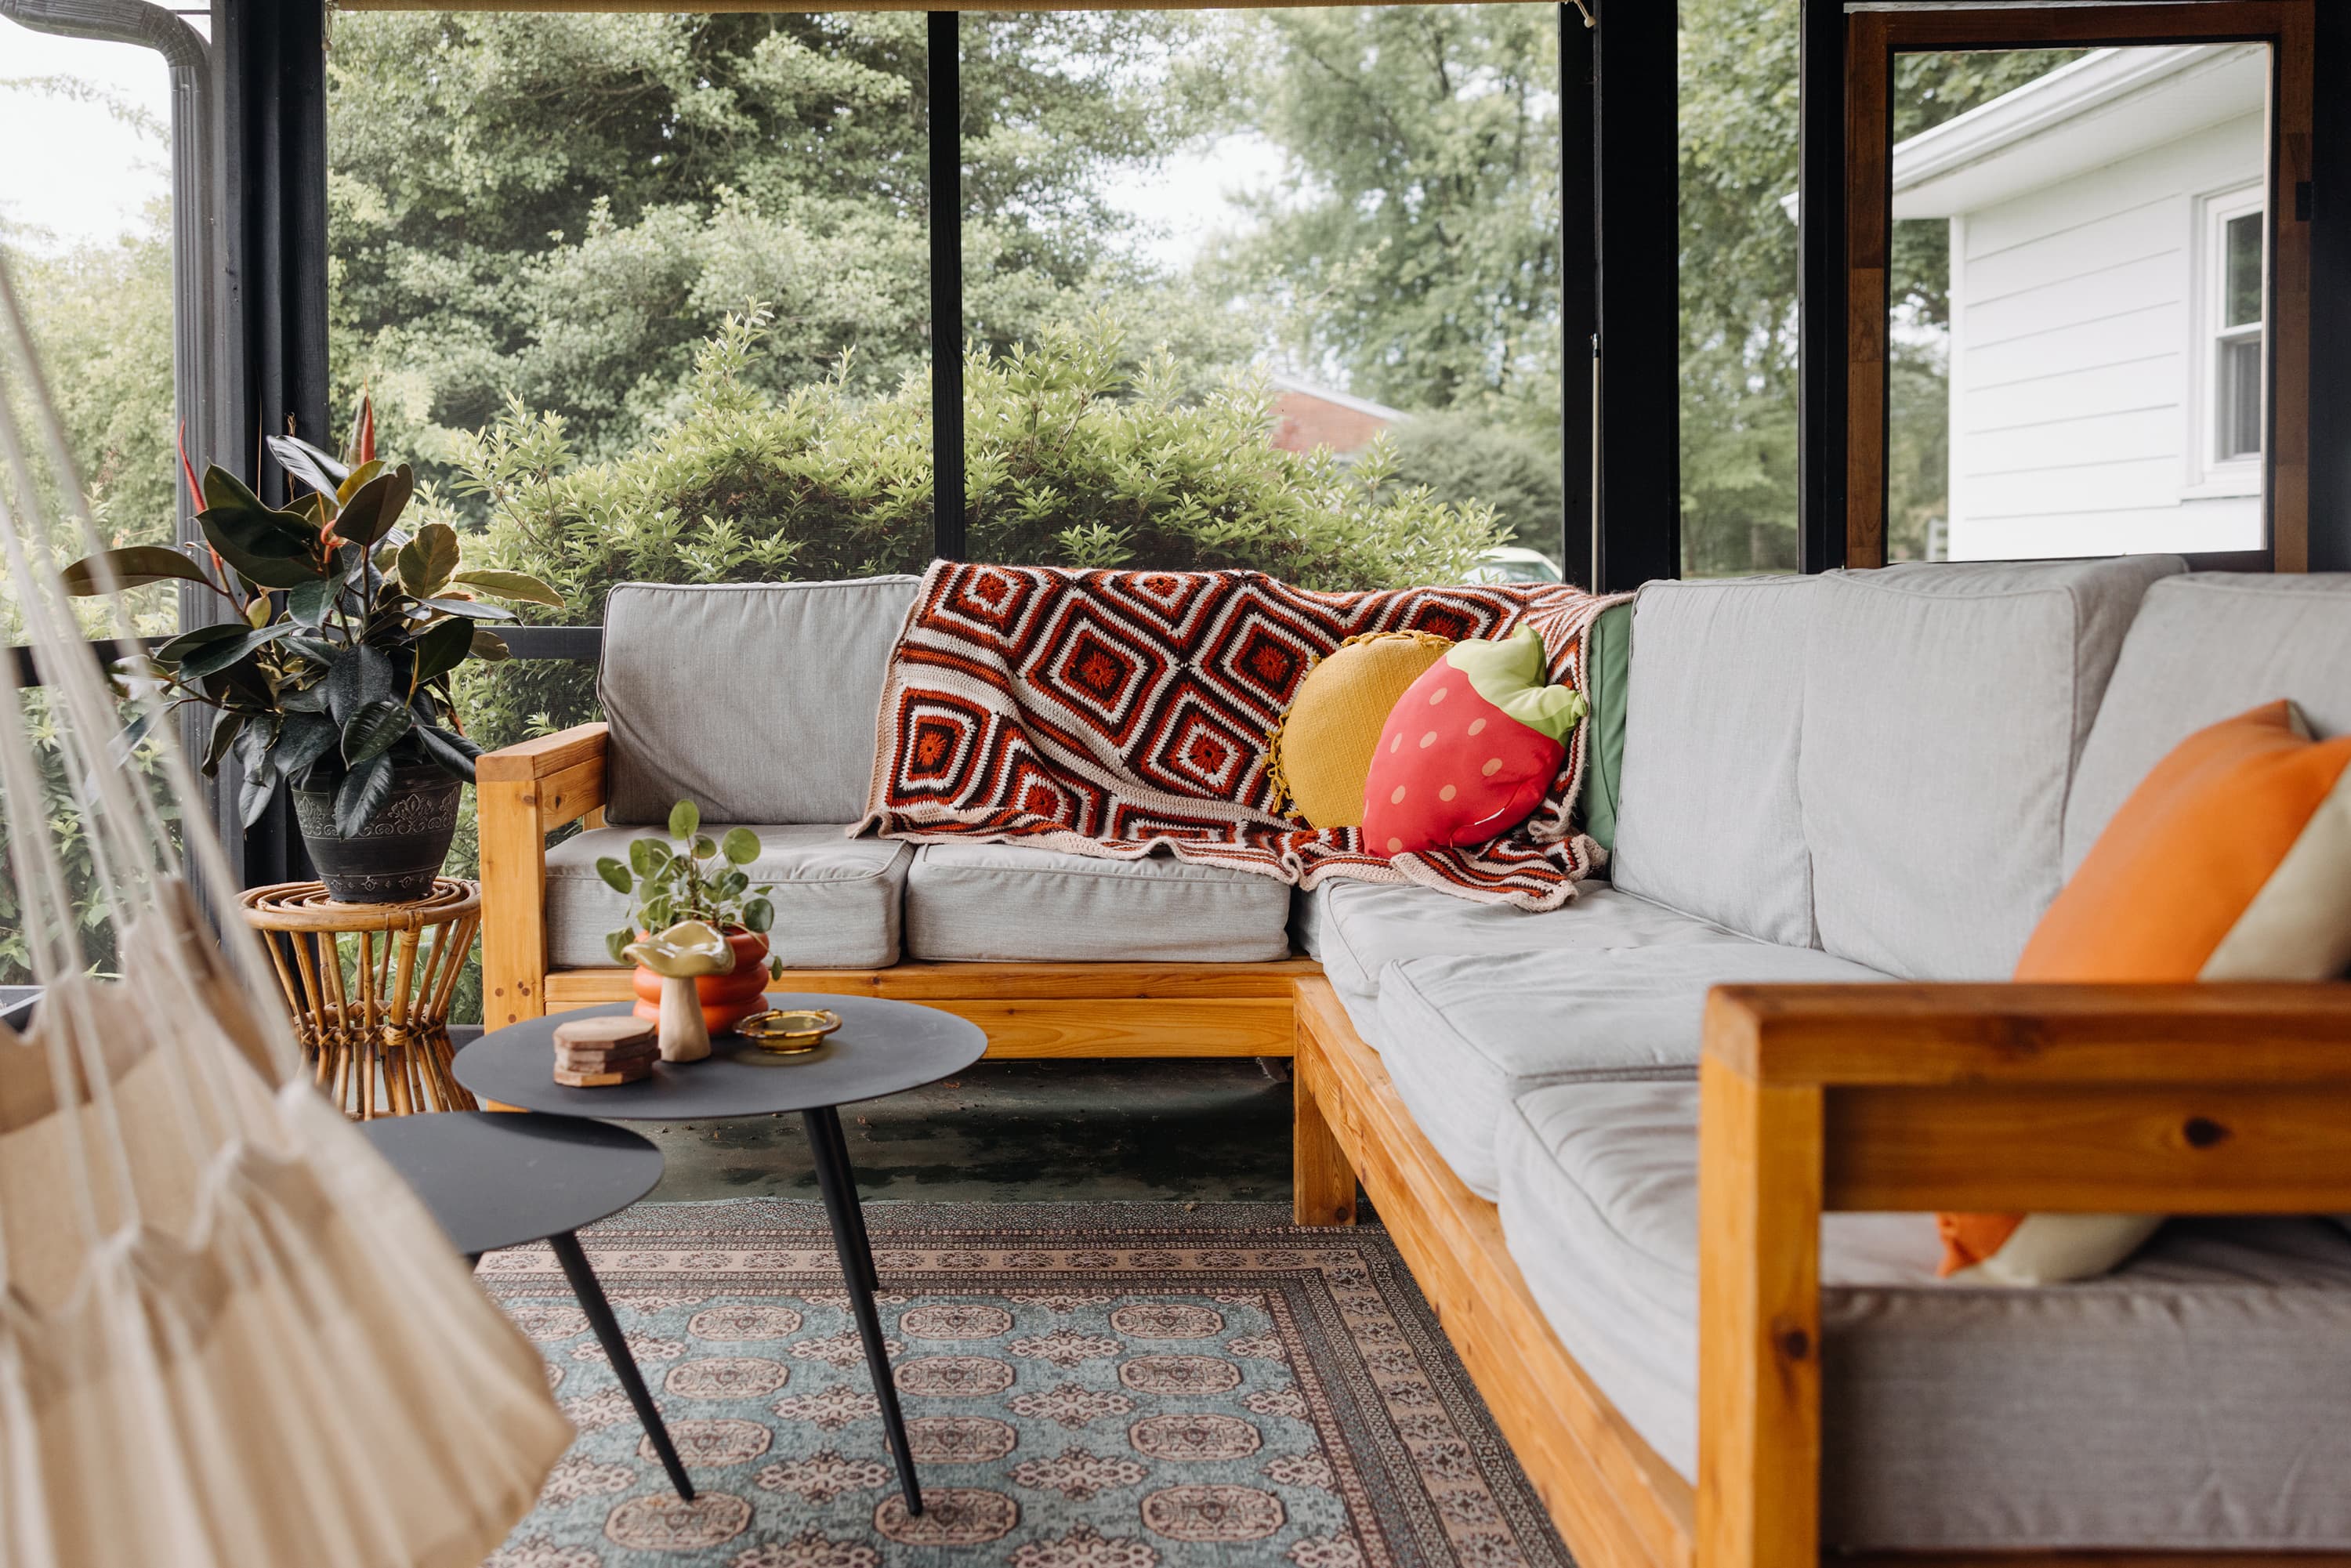 210 Outdoor Furniture & Accessories Design Ideas  outdoor, outdoor  furniture, outdoor furniture accessories